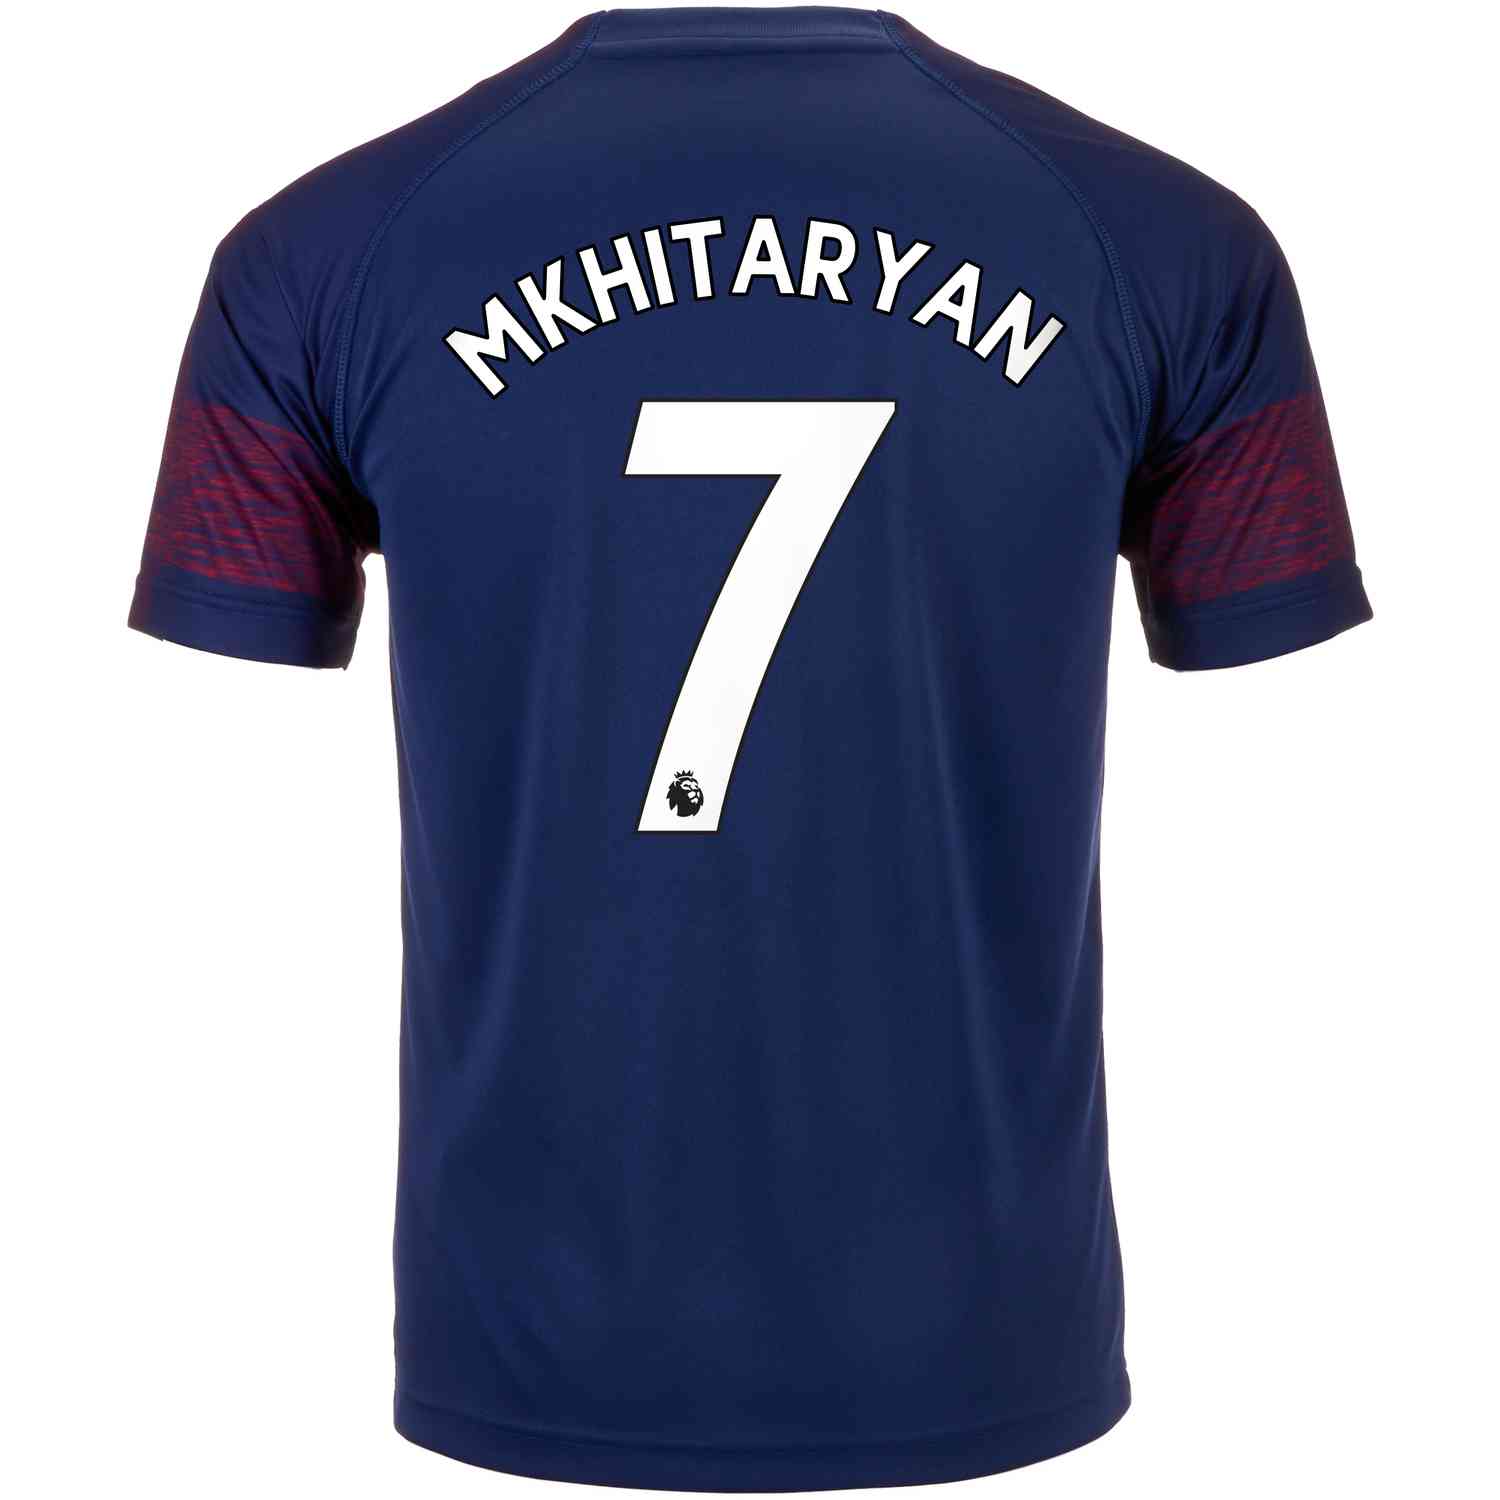 Why Henrikh Mkhitaryan will NOT wear Arsenal's number 7 shirt in